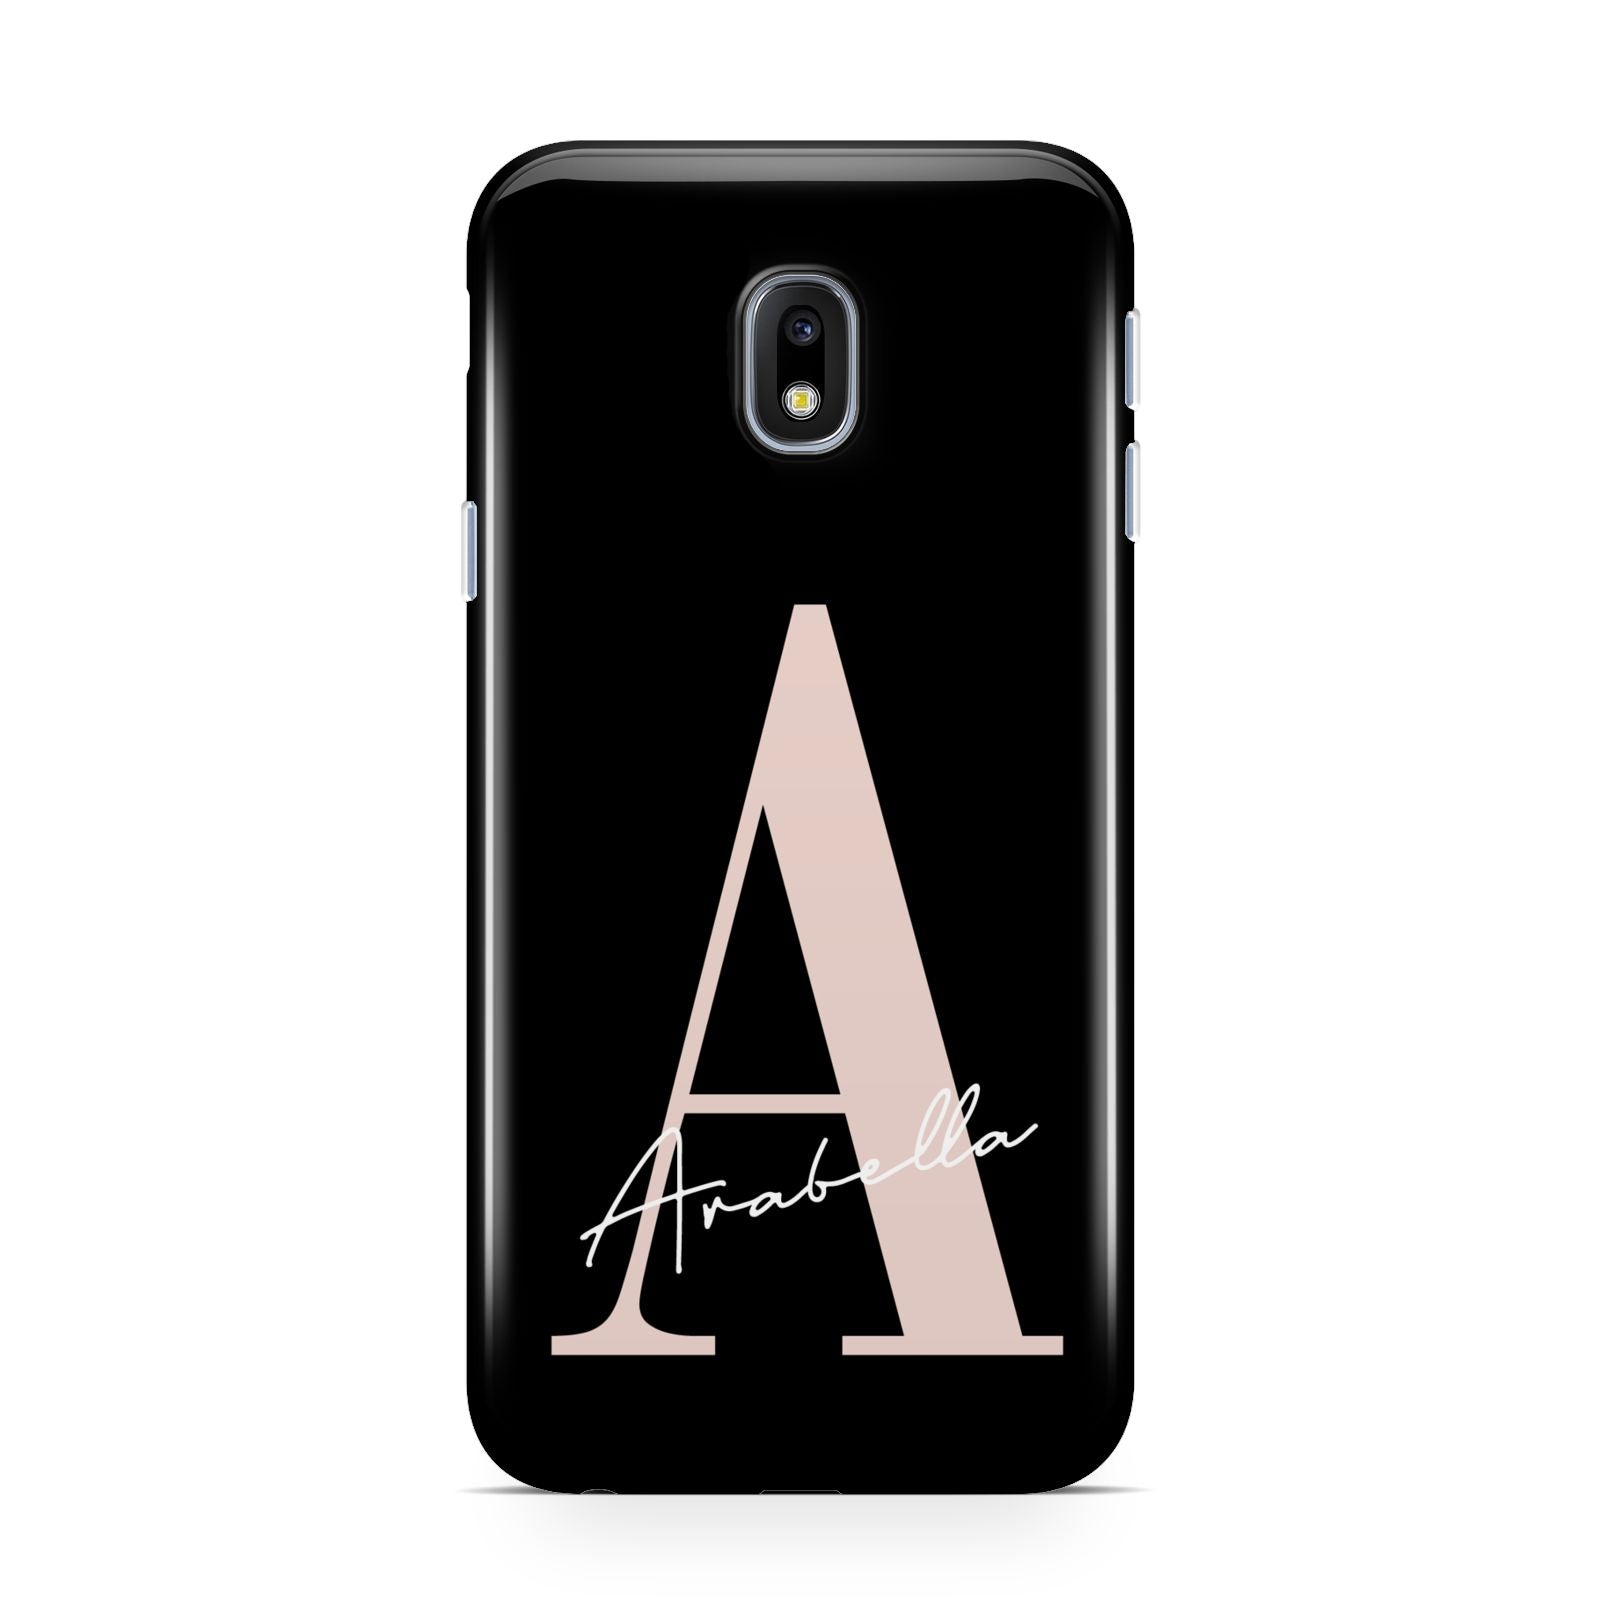 Personalised Black Pink Initial Samsung Galaxy J3 2017 Case